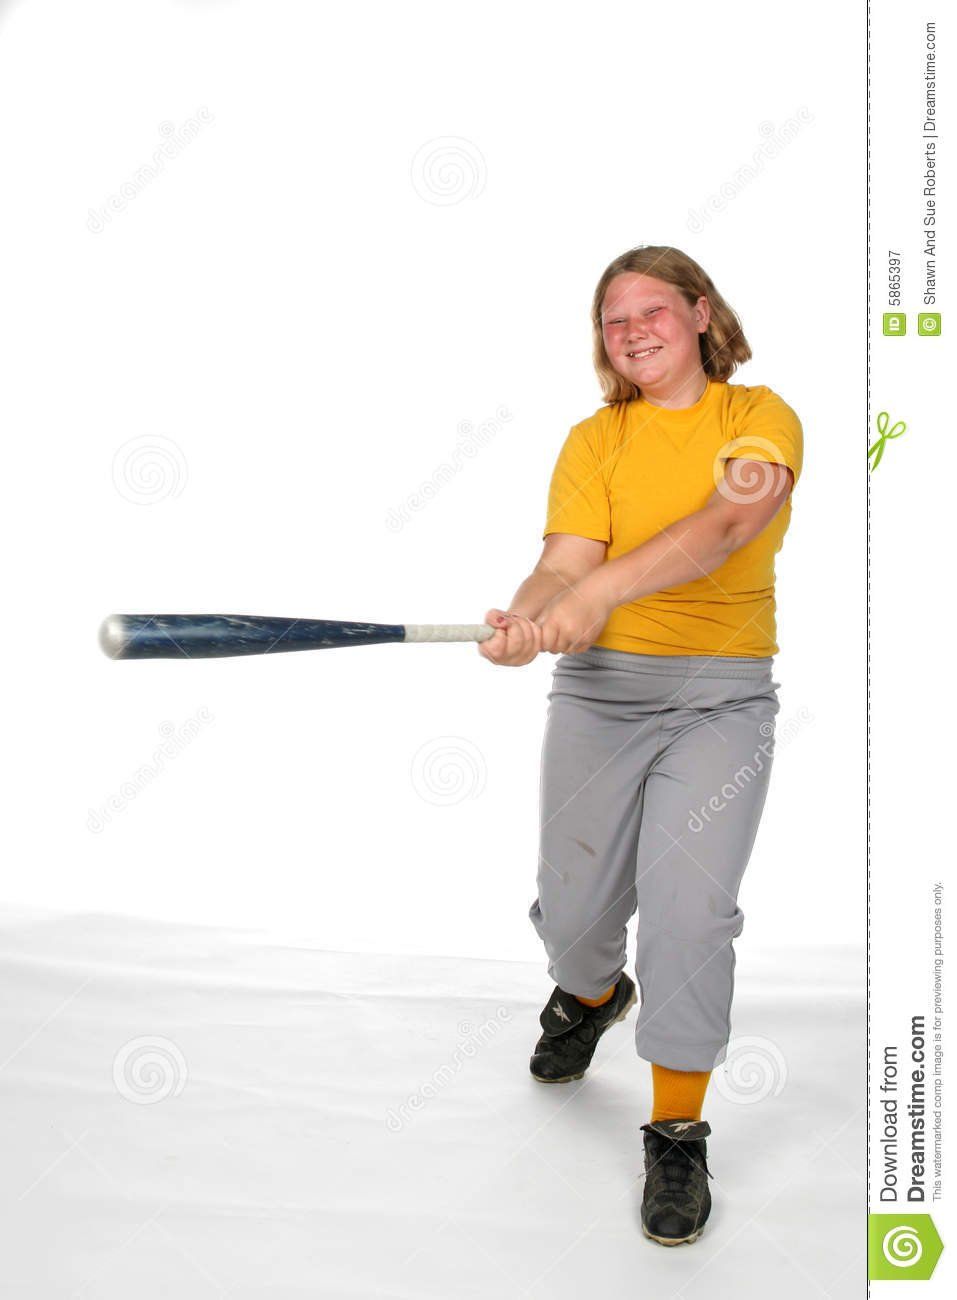 Girl swinging a baseball bat